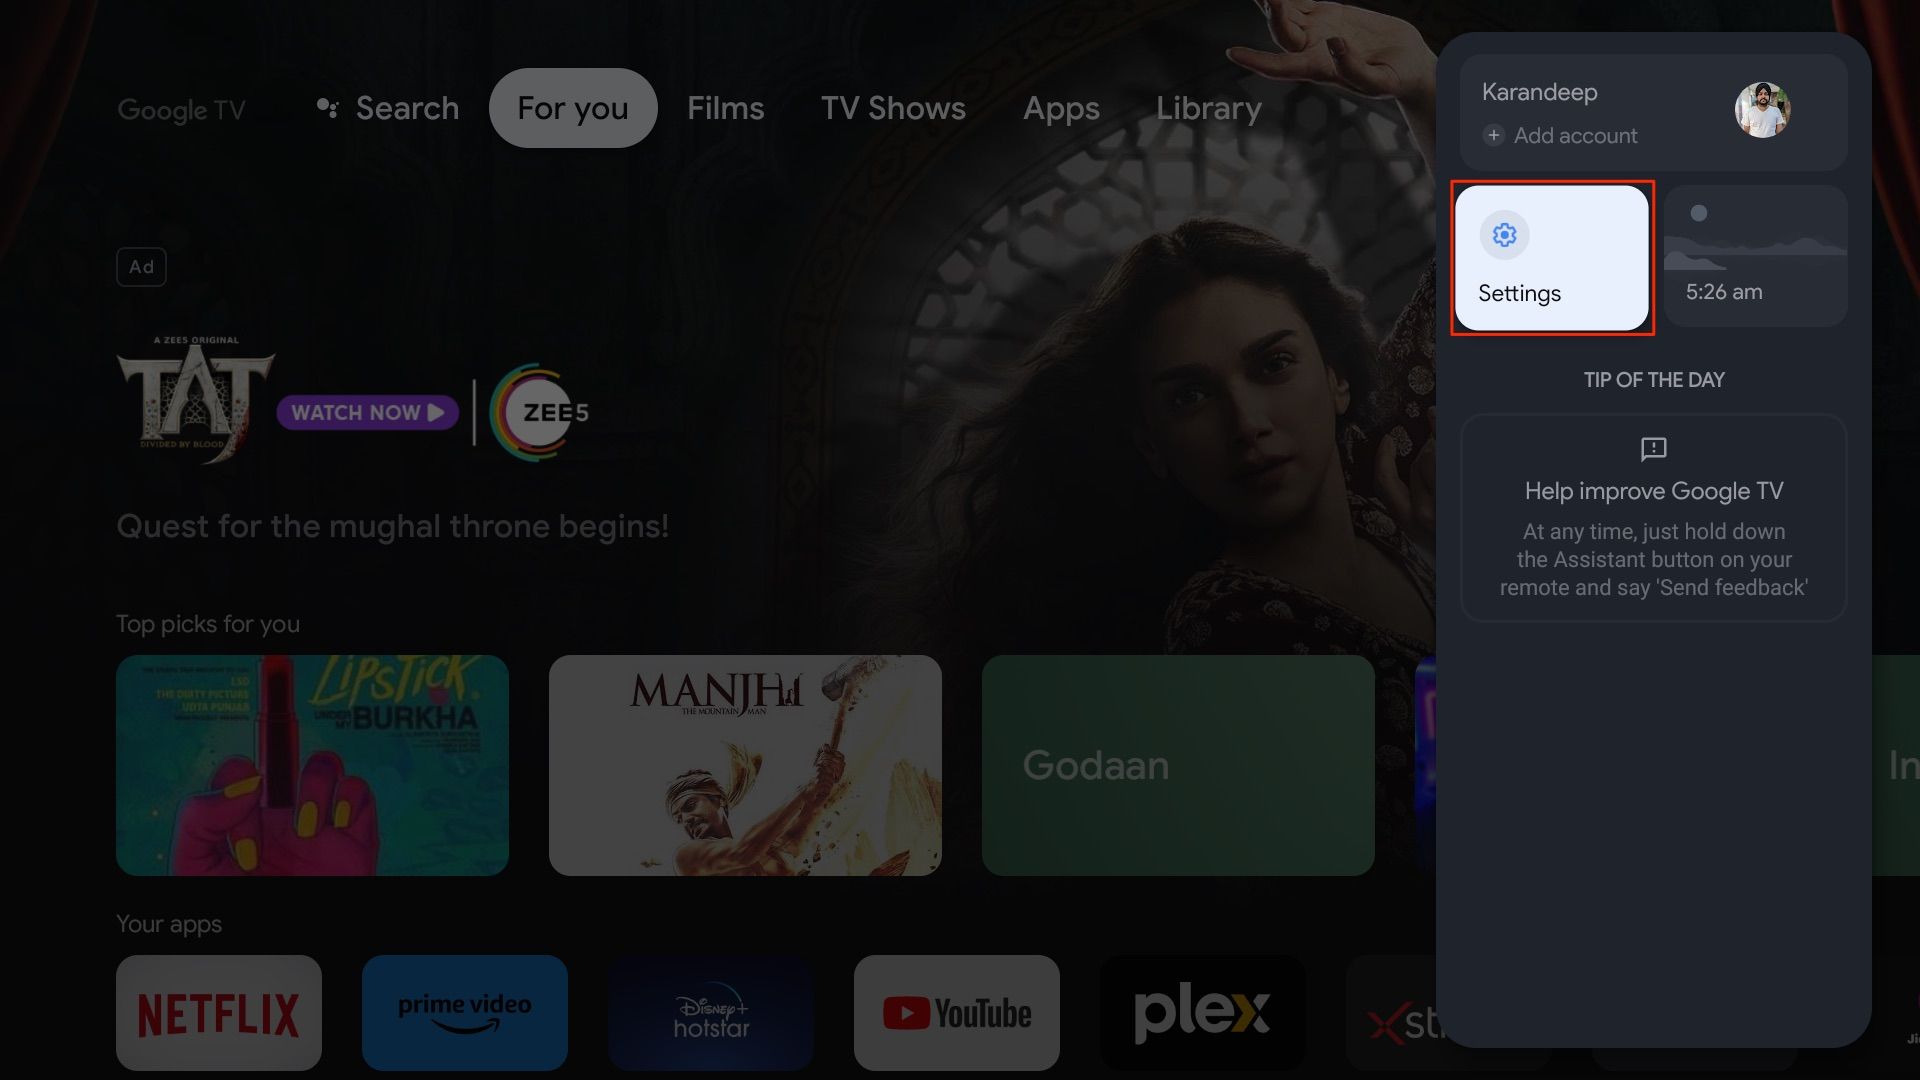 Google TV settings option